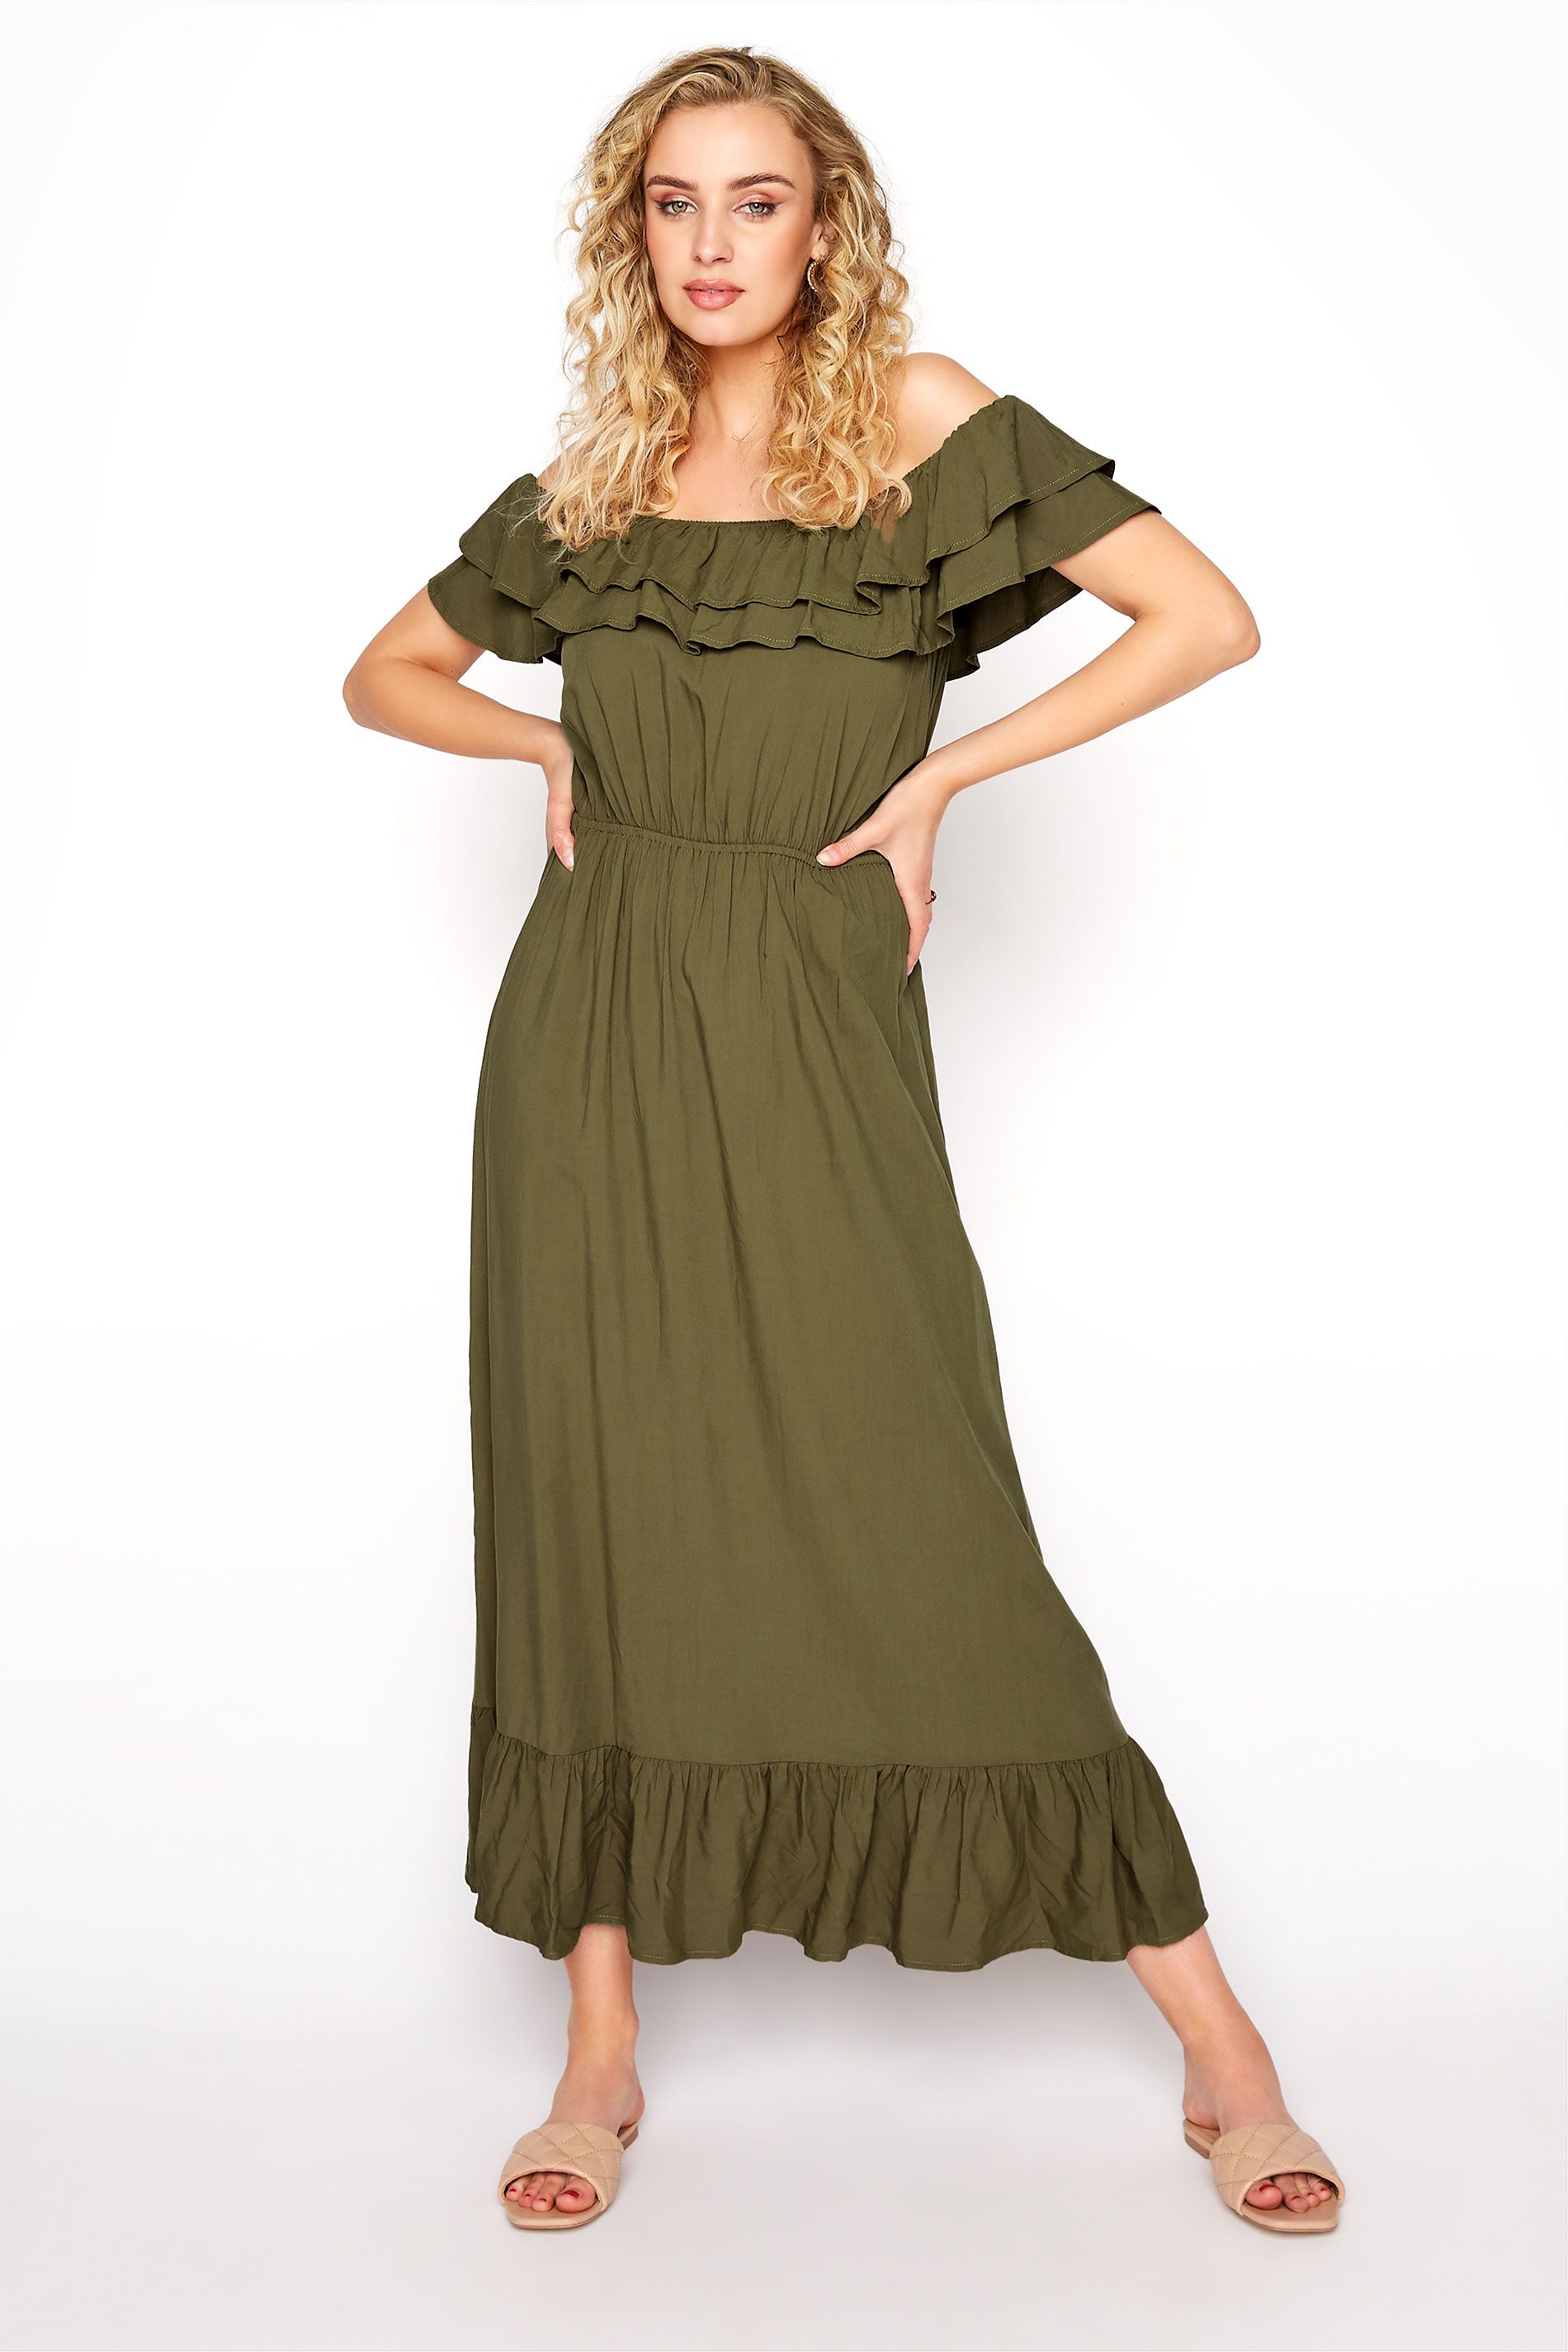 LTS Tall Khaki Green Double Frill Bardot Midi Dress | Long Tall Sally